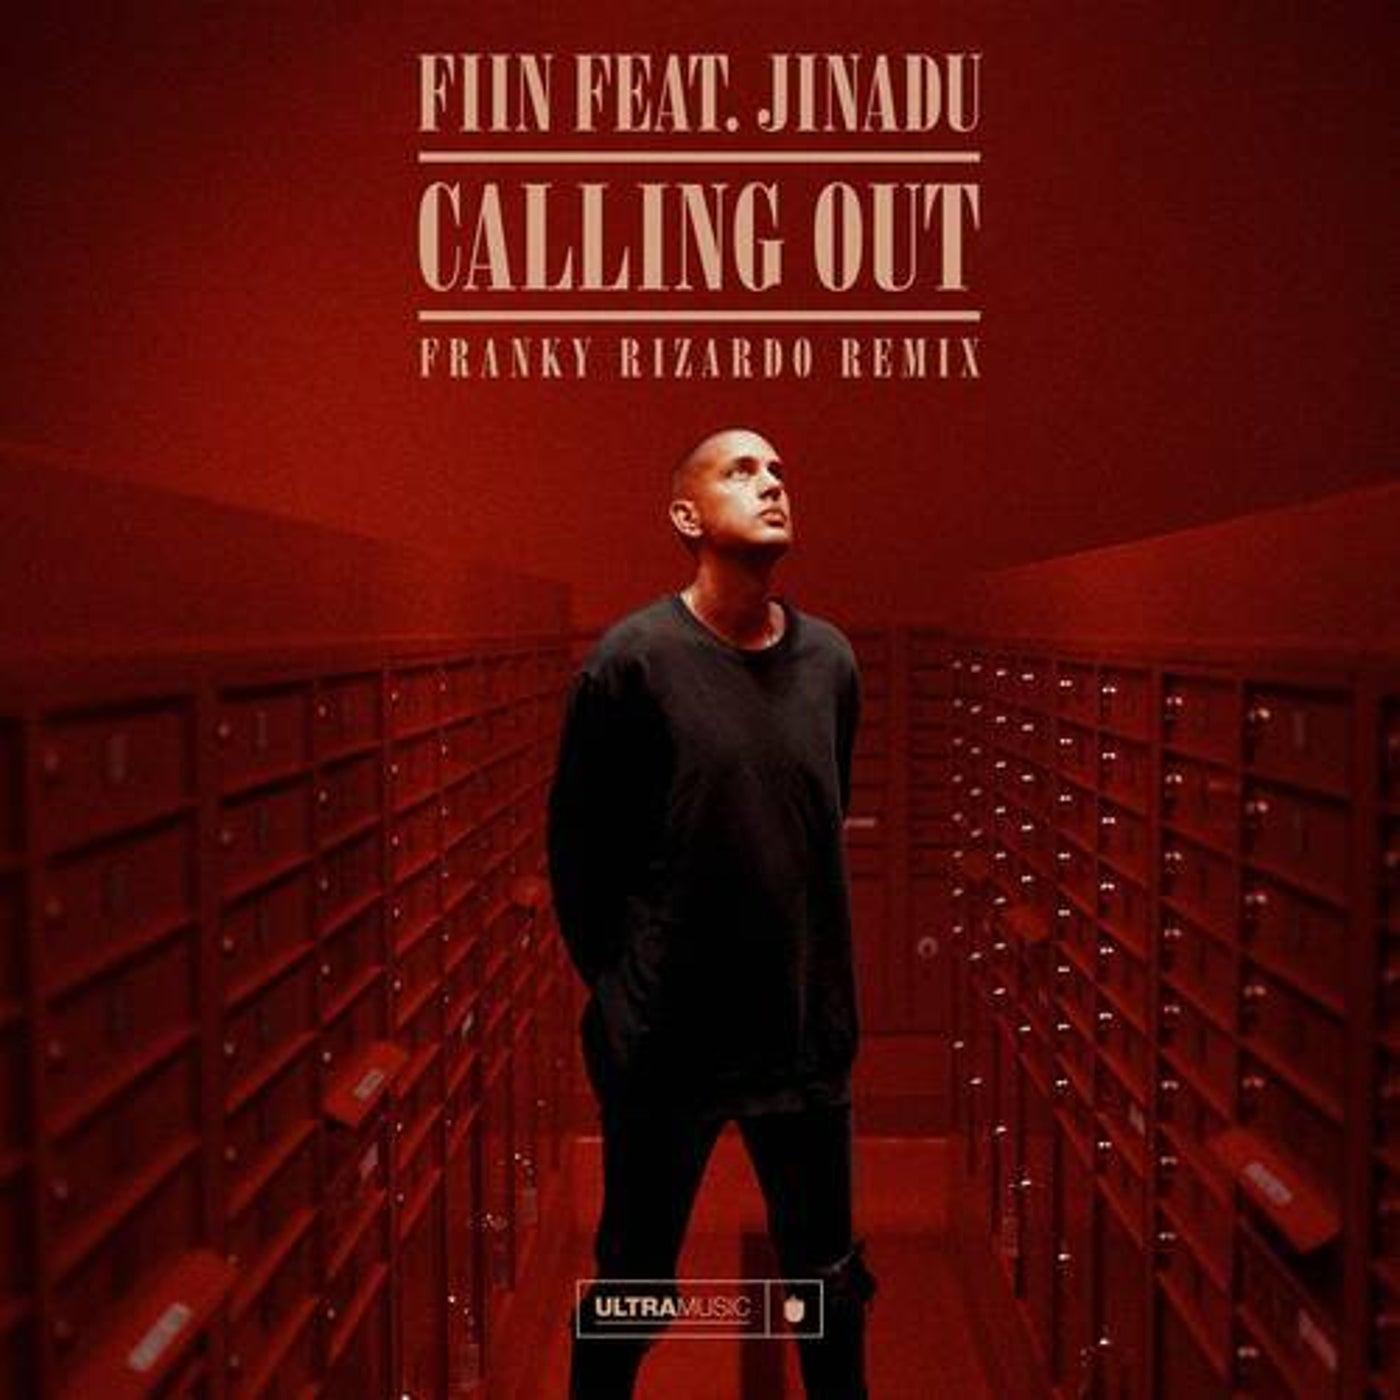 Calling Out (Franky Rizardo Remix)